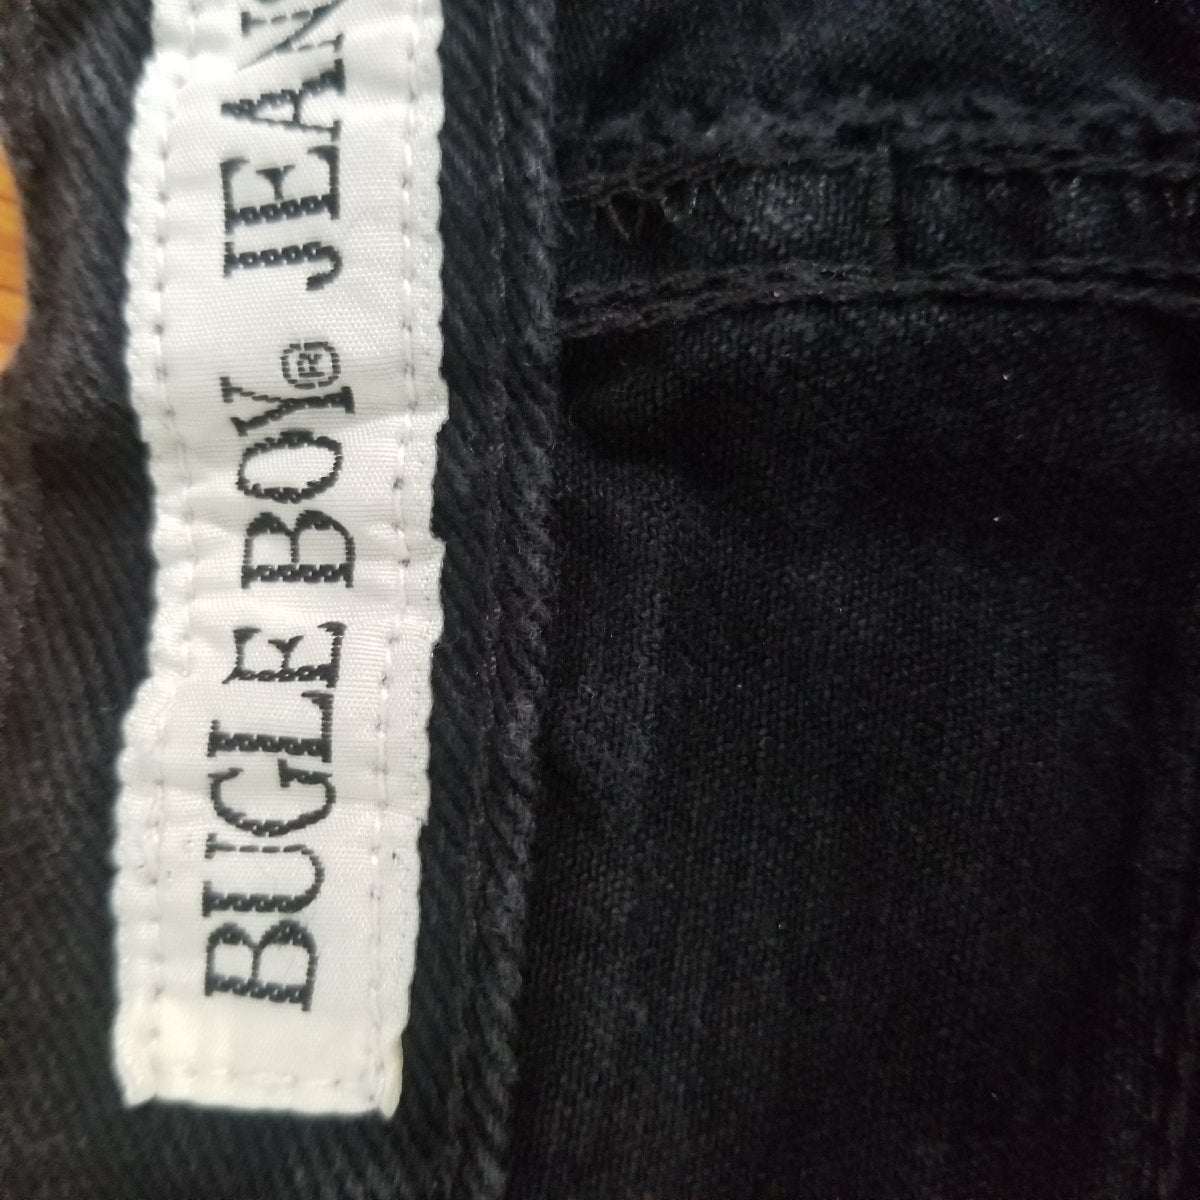 80s/90s Bugle Boy Jeans Black All Cotton Unisex Men Waist 36 - themallvintage The Mall Vintage